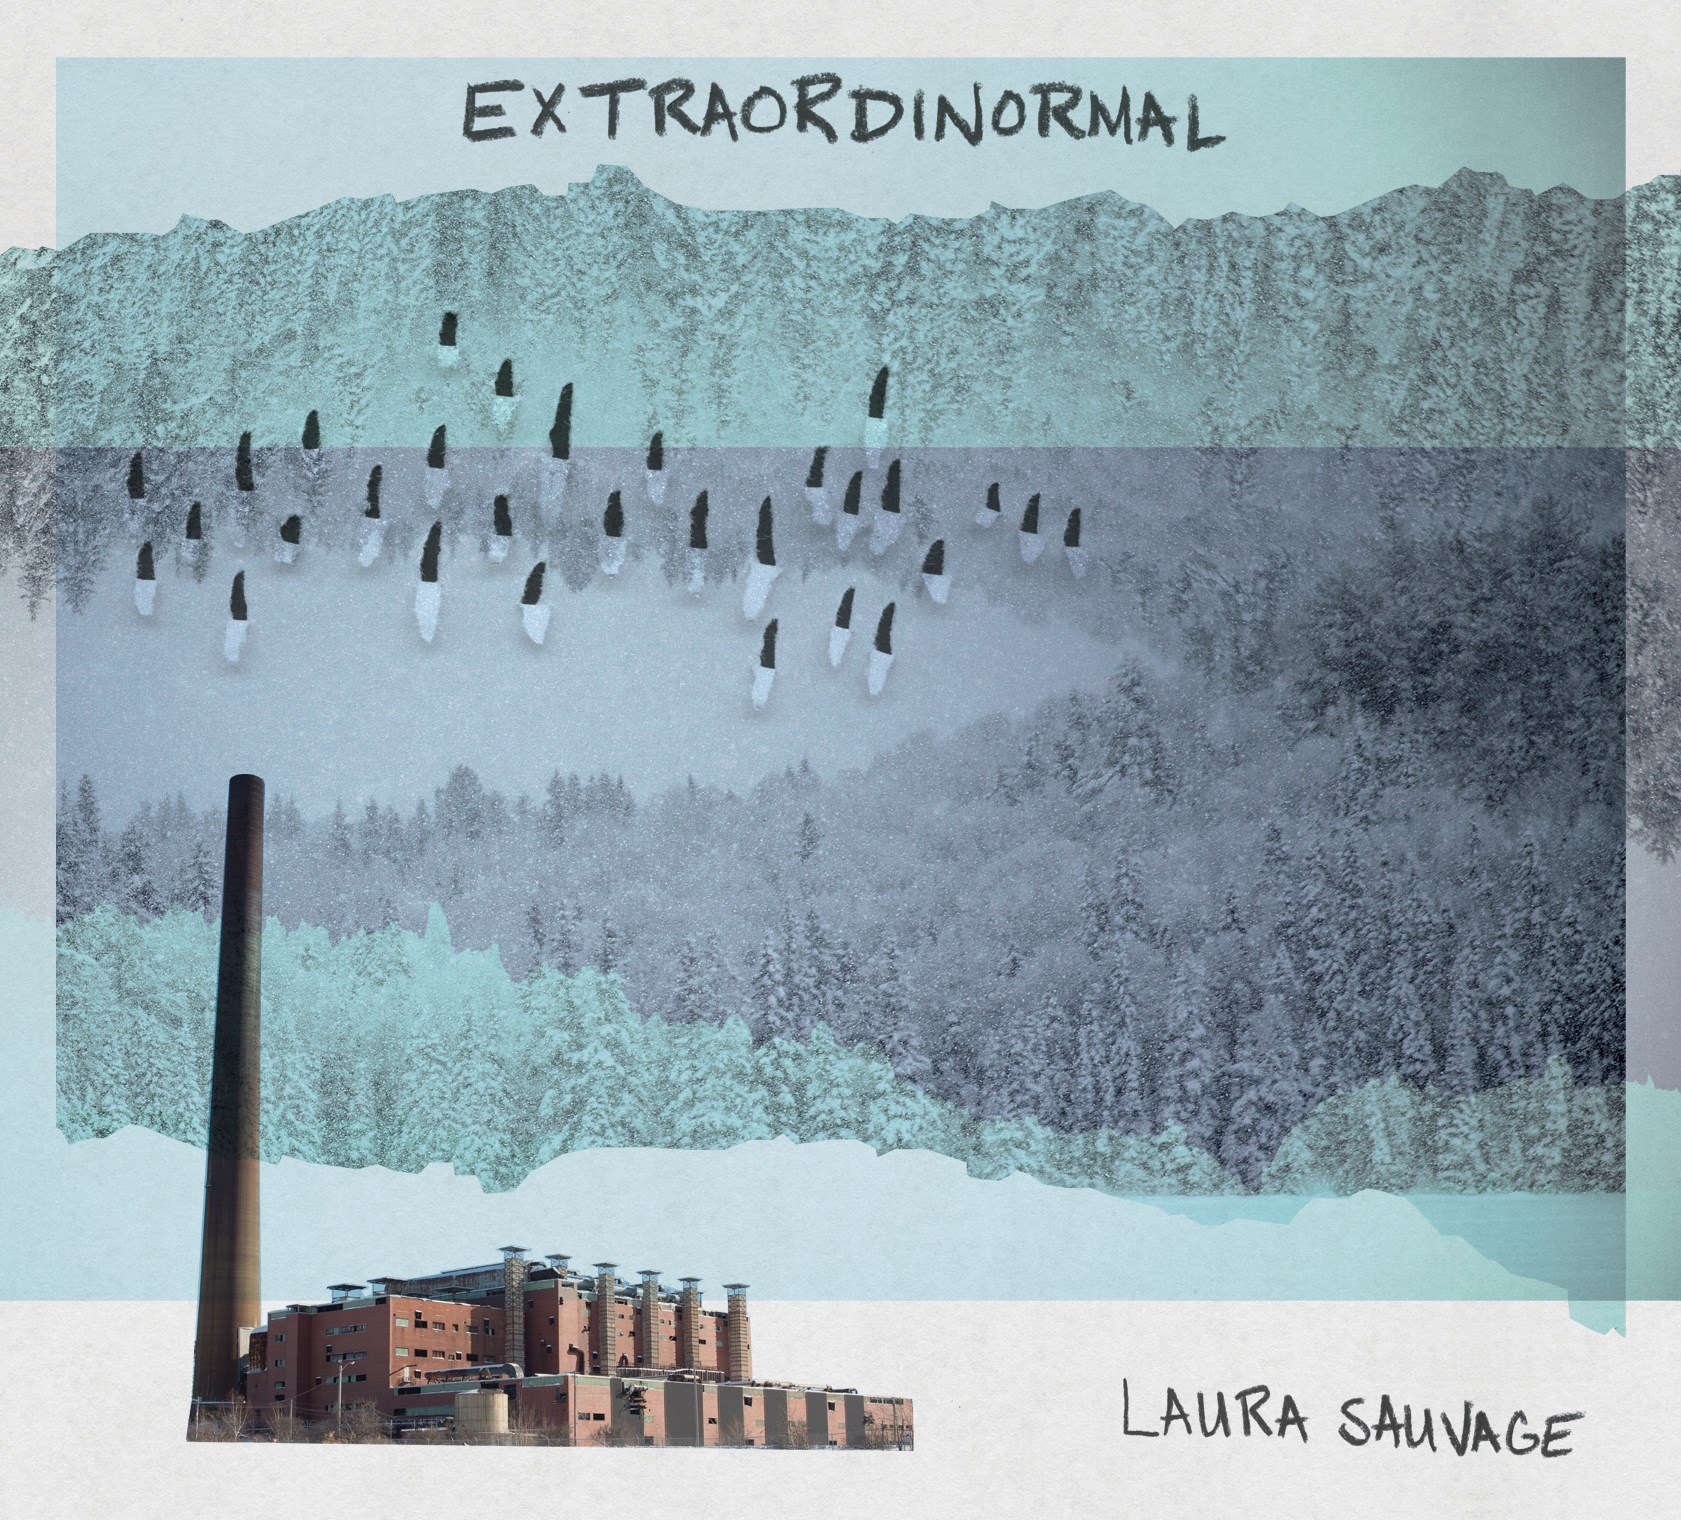 Laura Sauvage: Extraordinormal